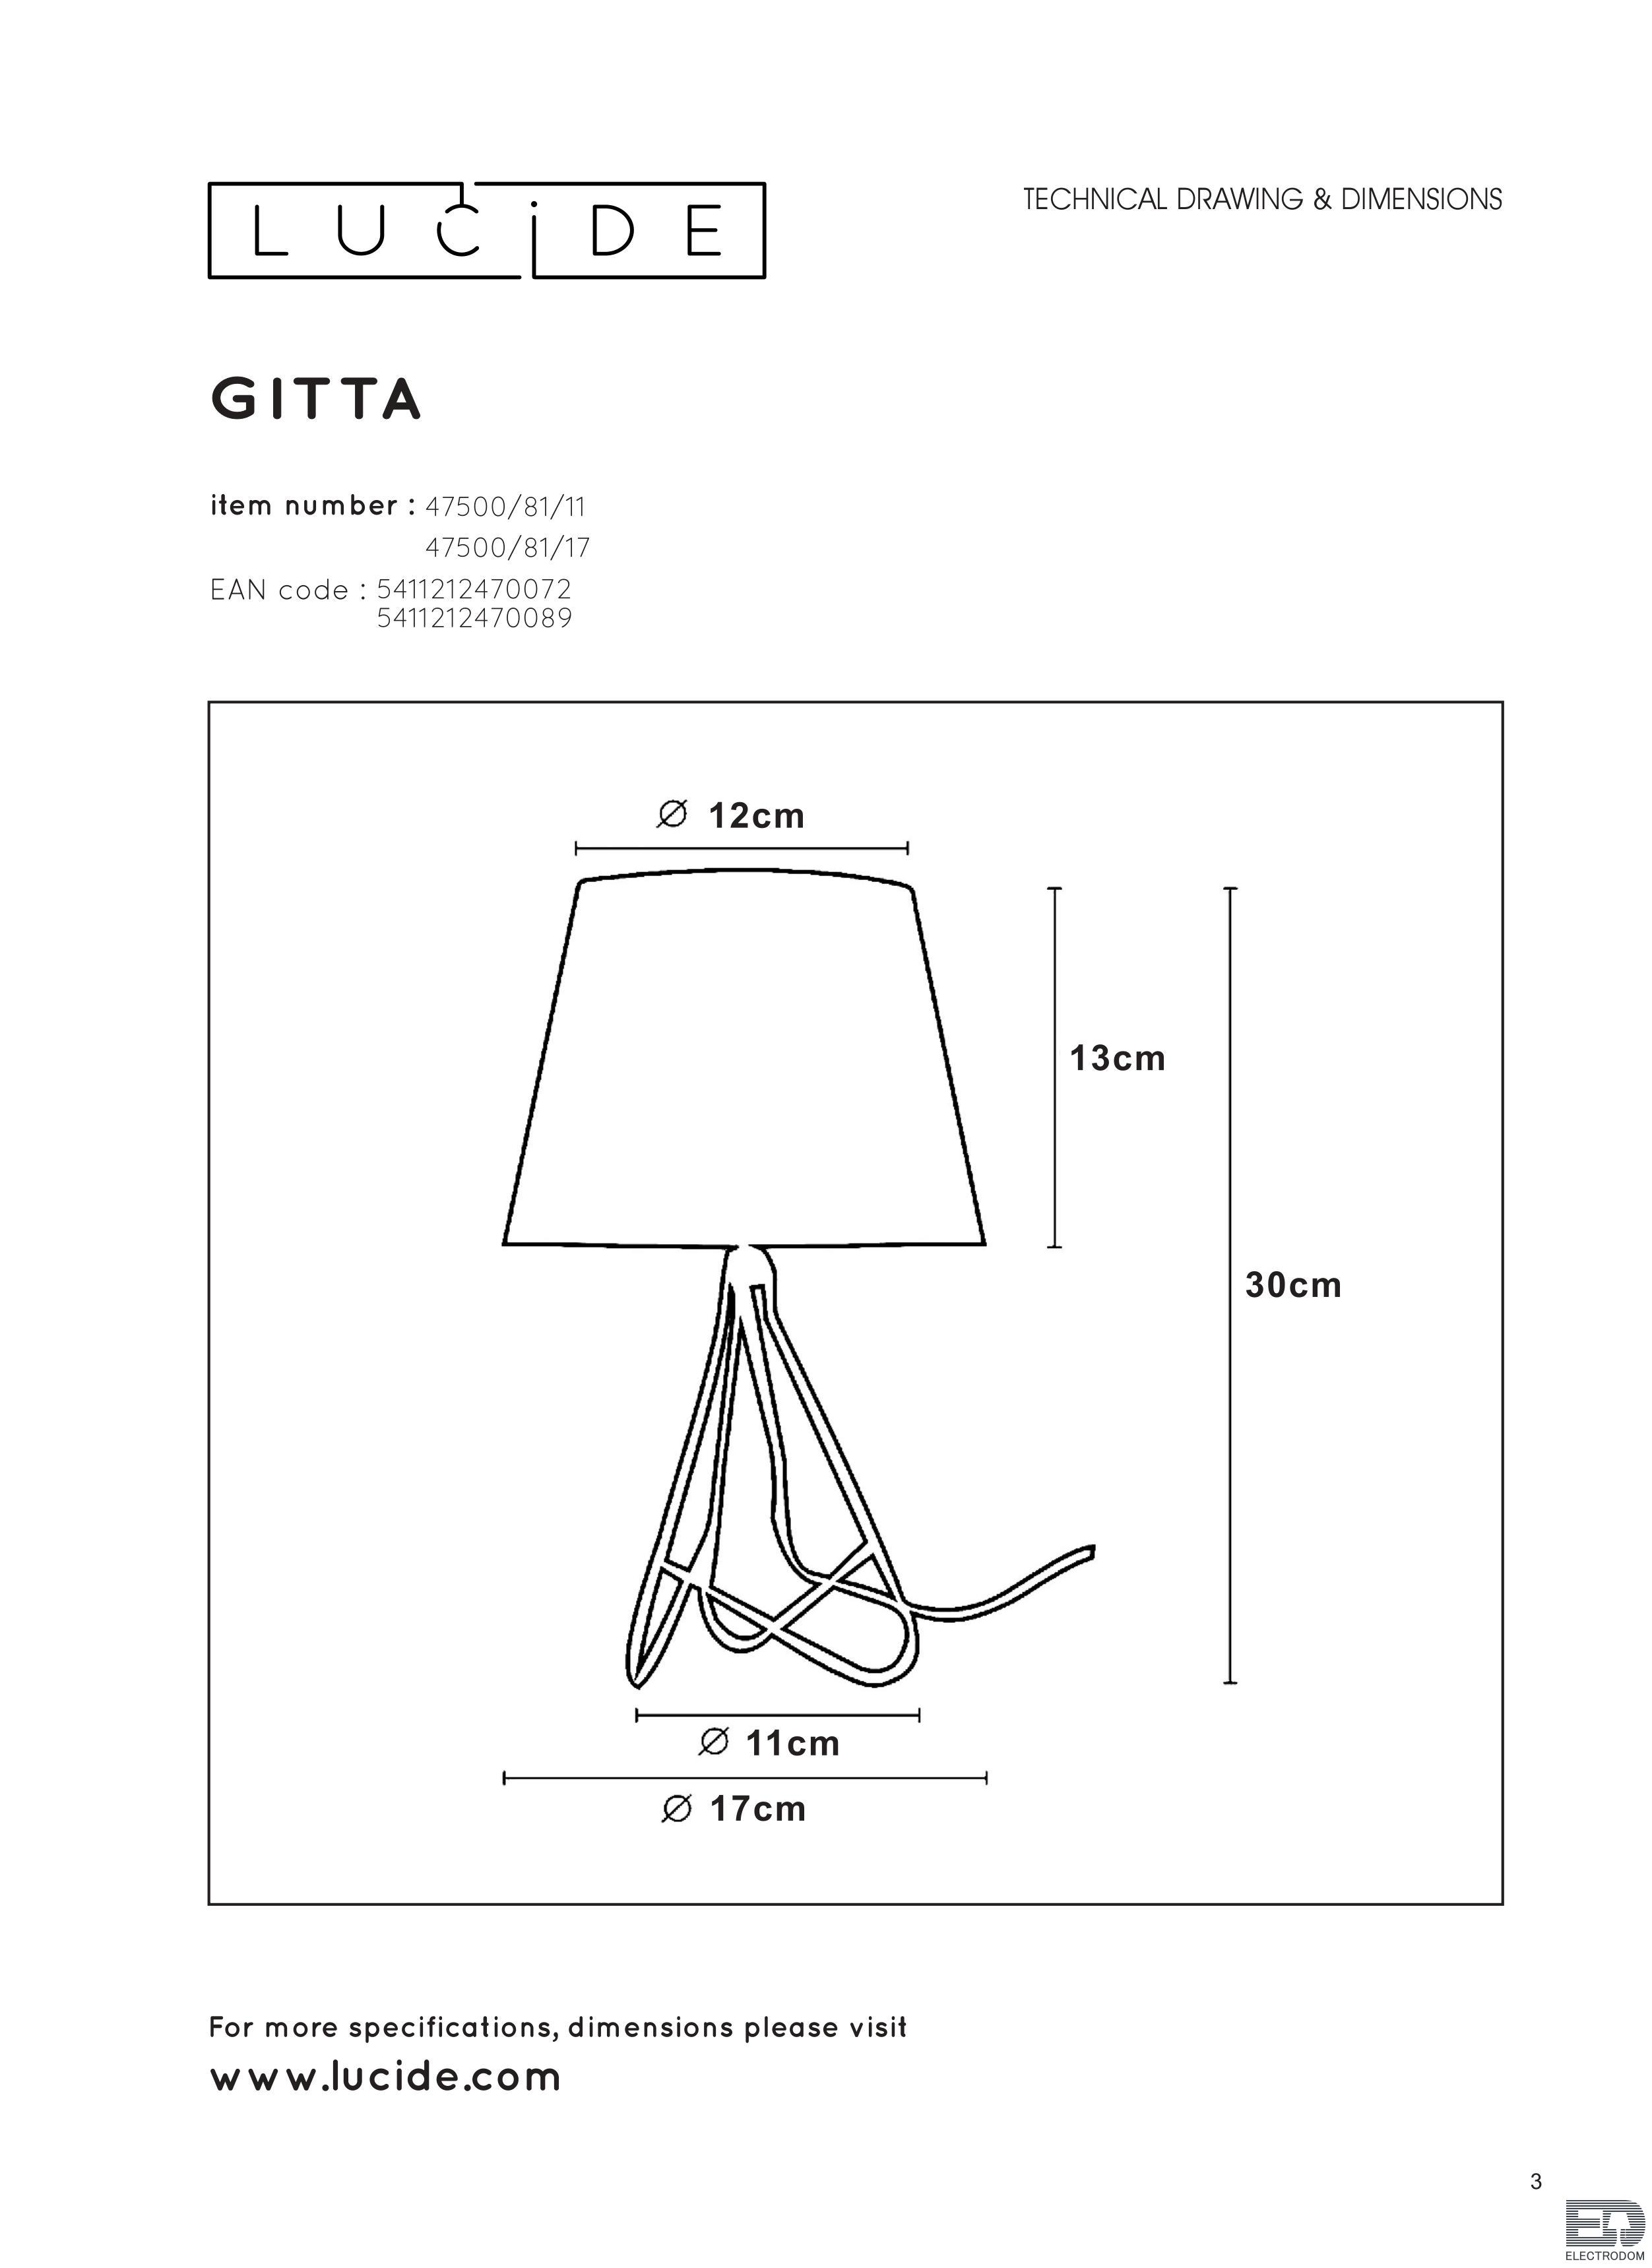 Настольная лампа Lucide Gitta 47500/81/11 - цена и фото 4